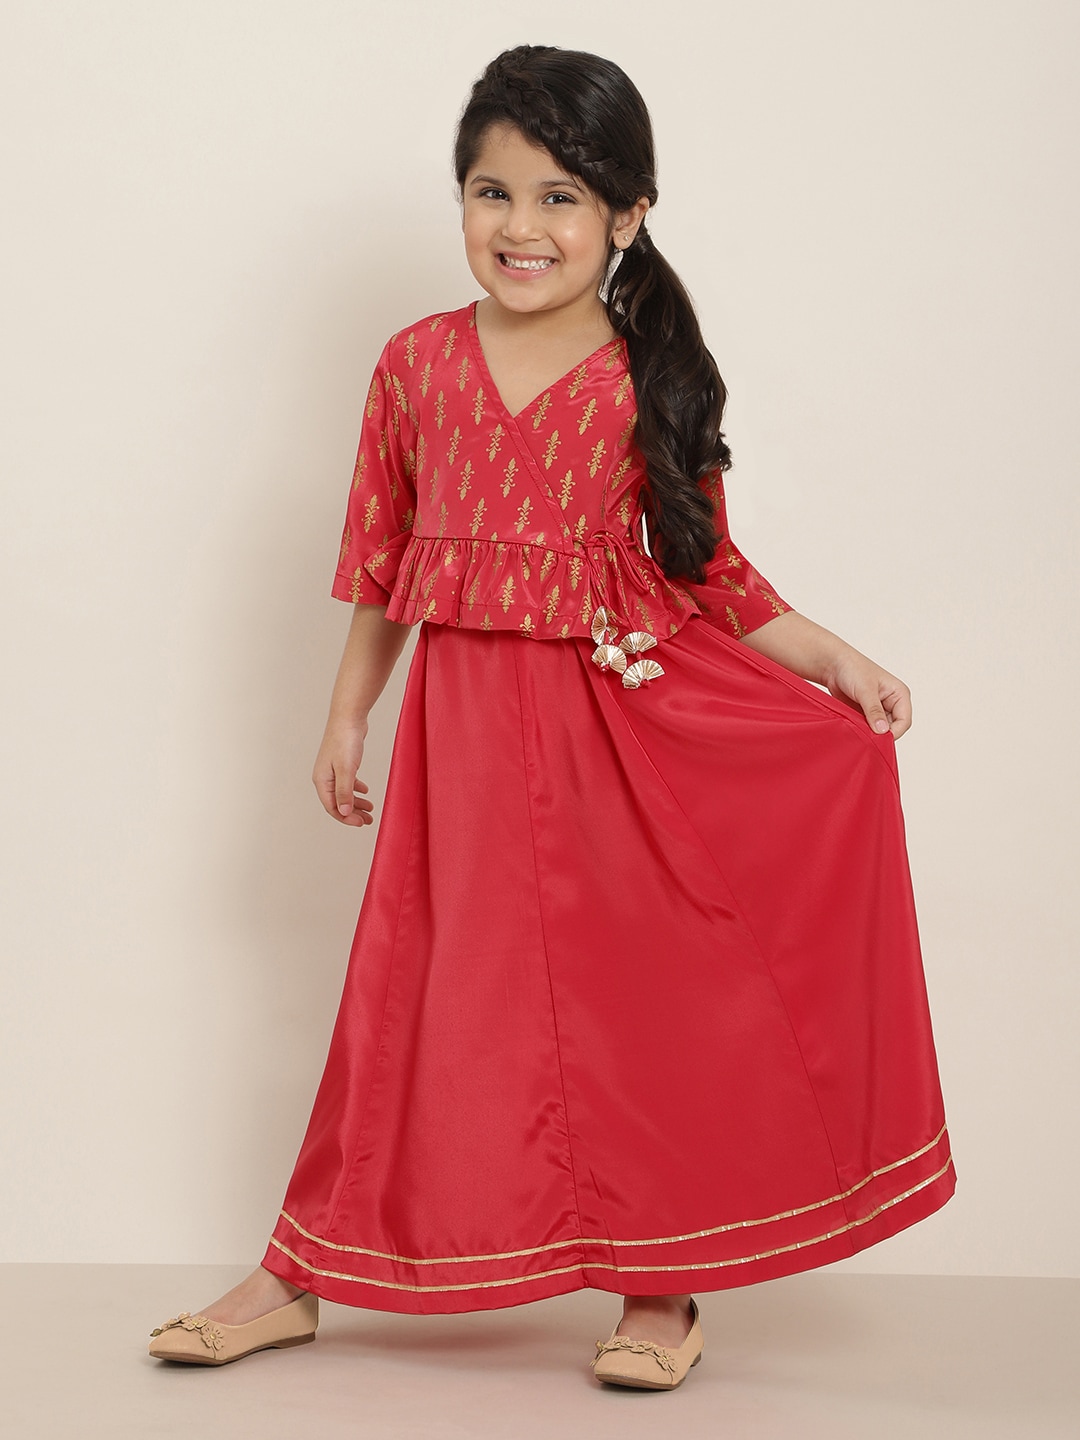 Sangria Girls Pink & Golden Ethnic Motifs Foil Print Ready to Wear Lehenga Choli Price in India